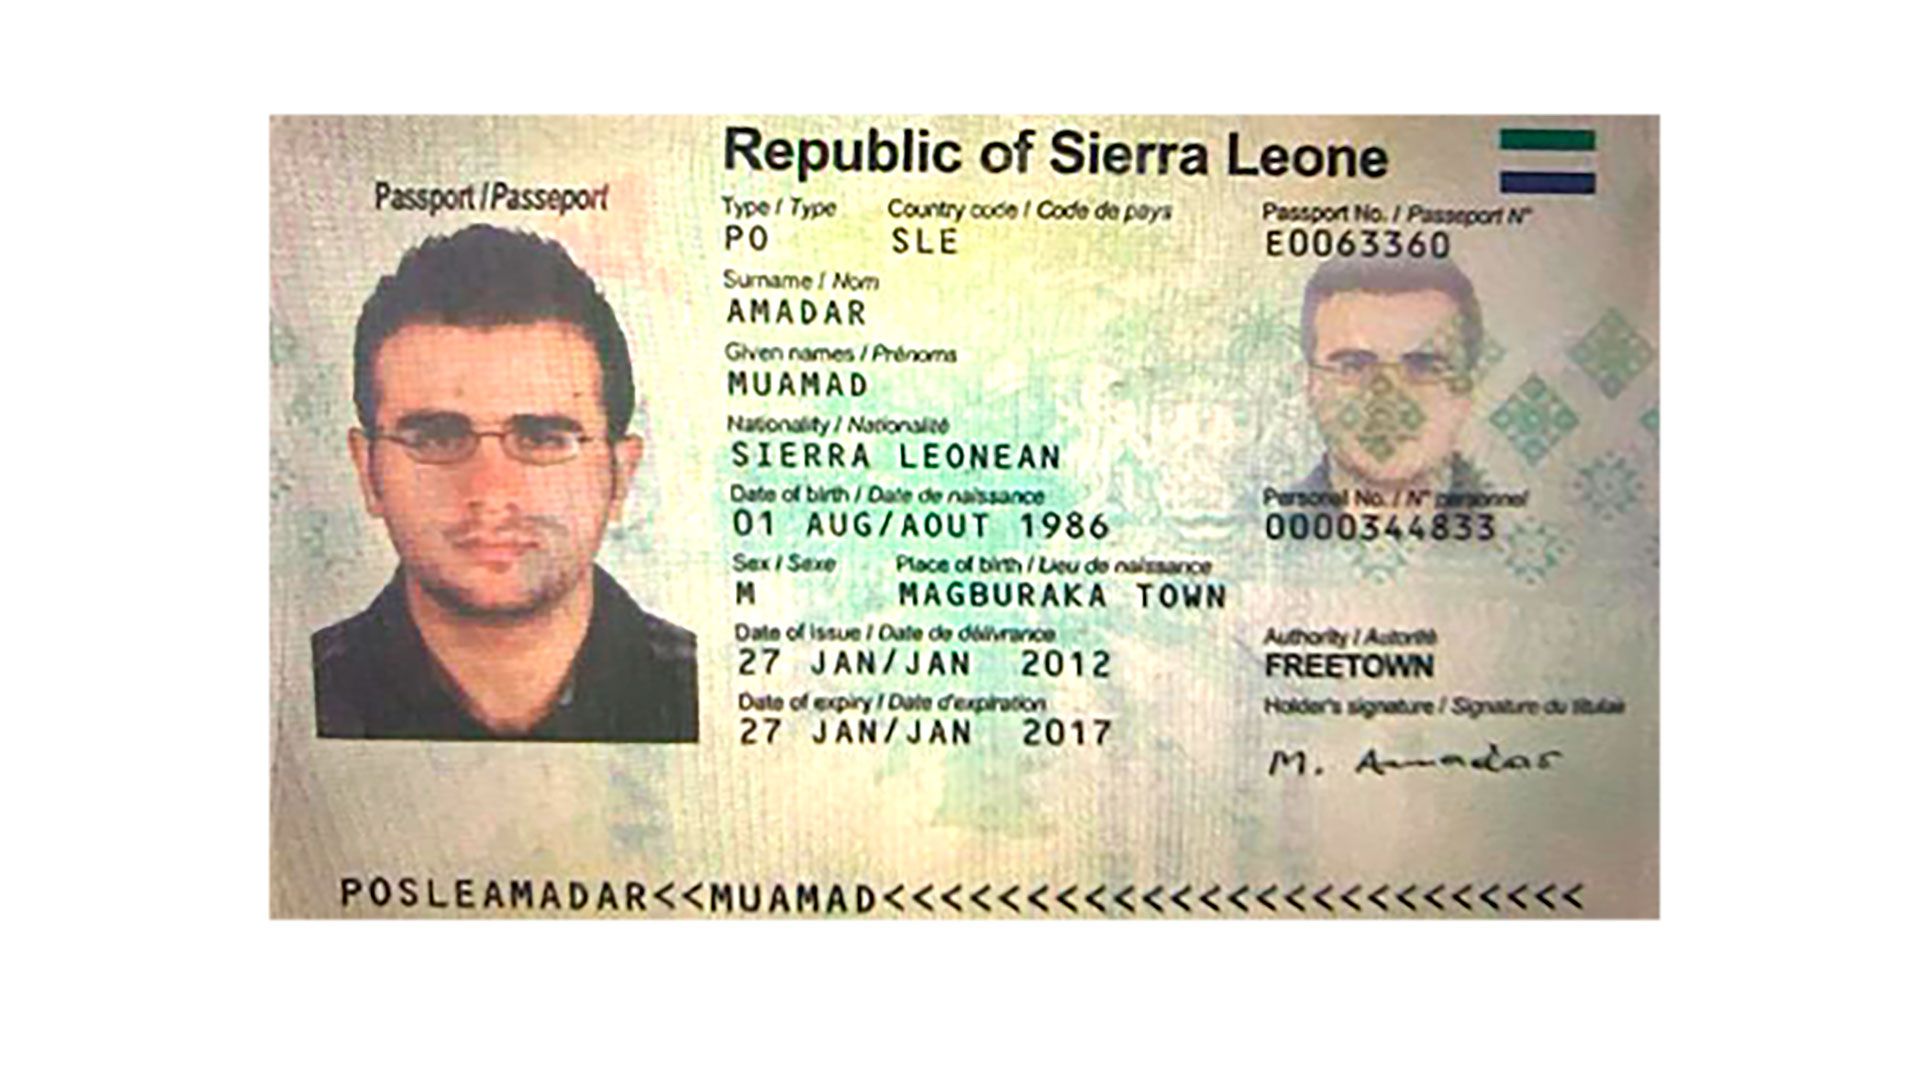 Pasaporte-falso-de-Sierra-Leona-Mohamad-Hamdar